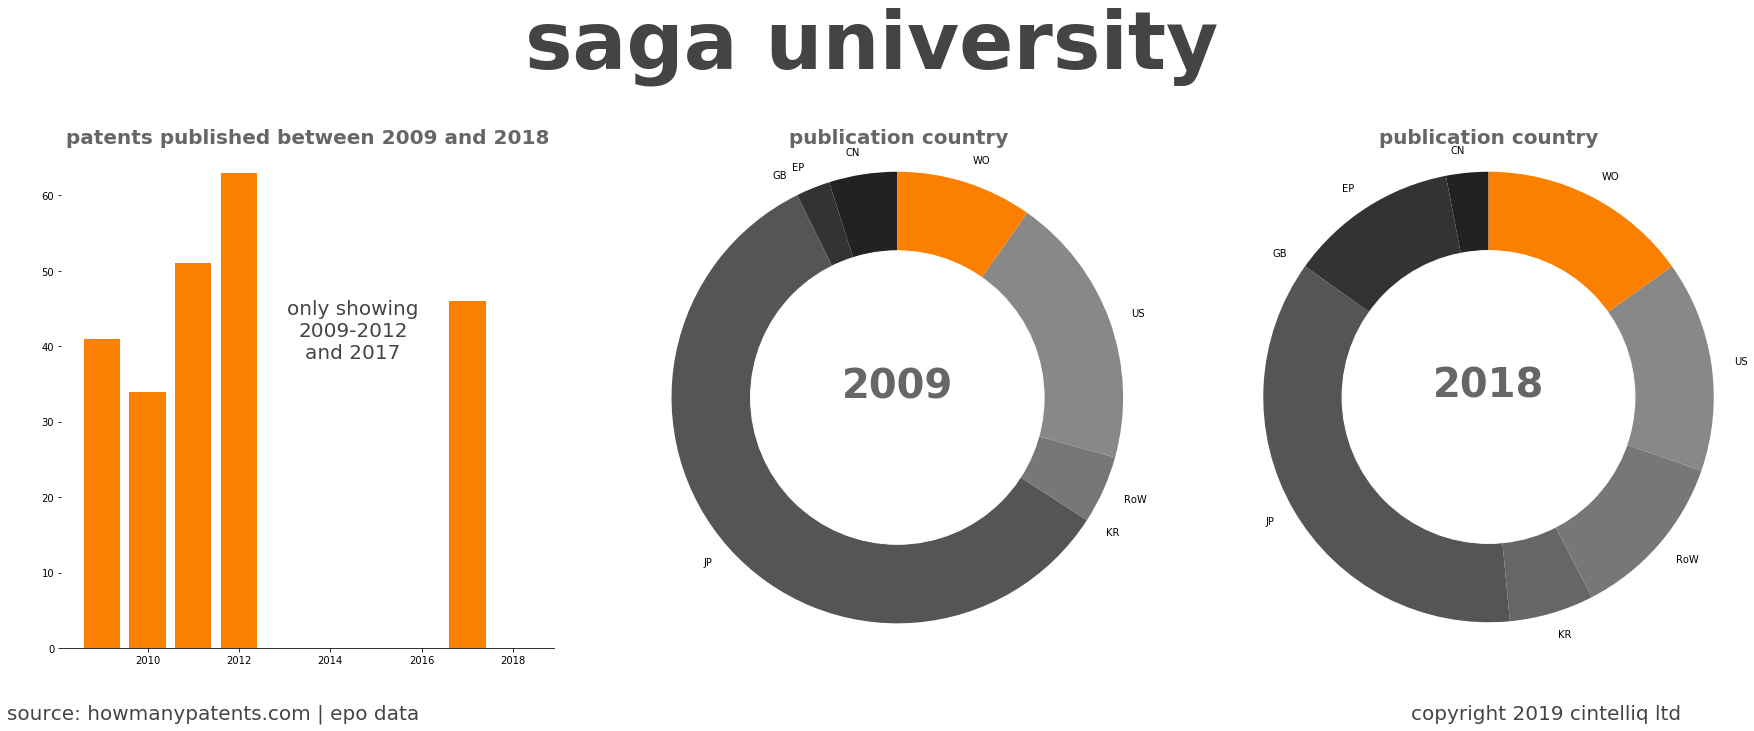 summary of patents for Saga University